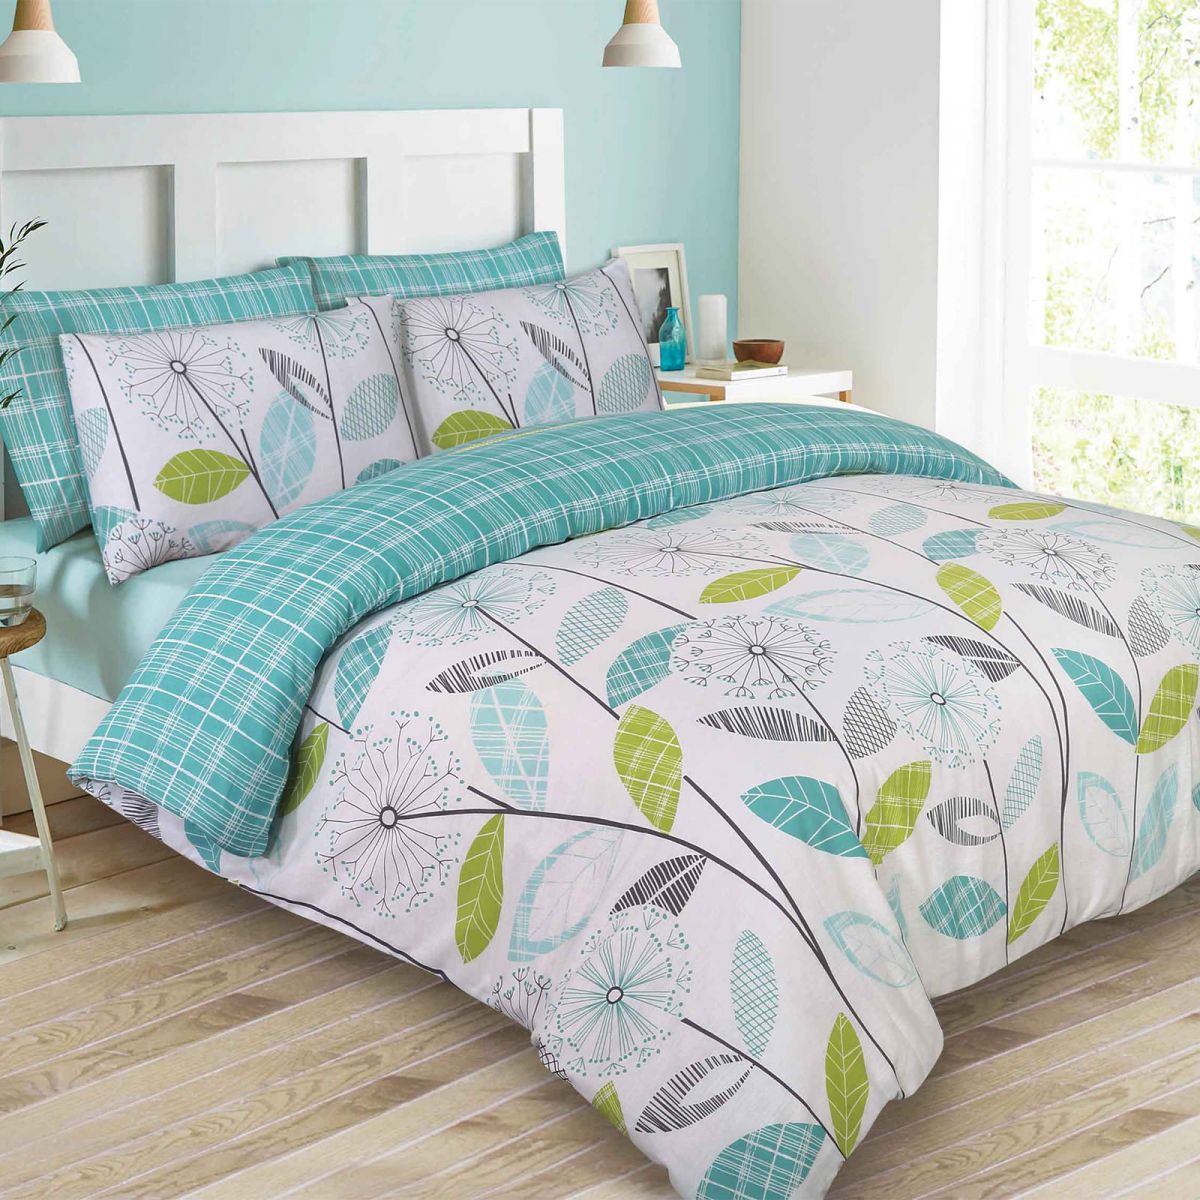 Dreamscene Allium Floral Tartan Check Bedding Double Duvet Cover Set - Teal/Green